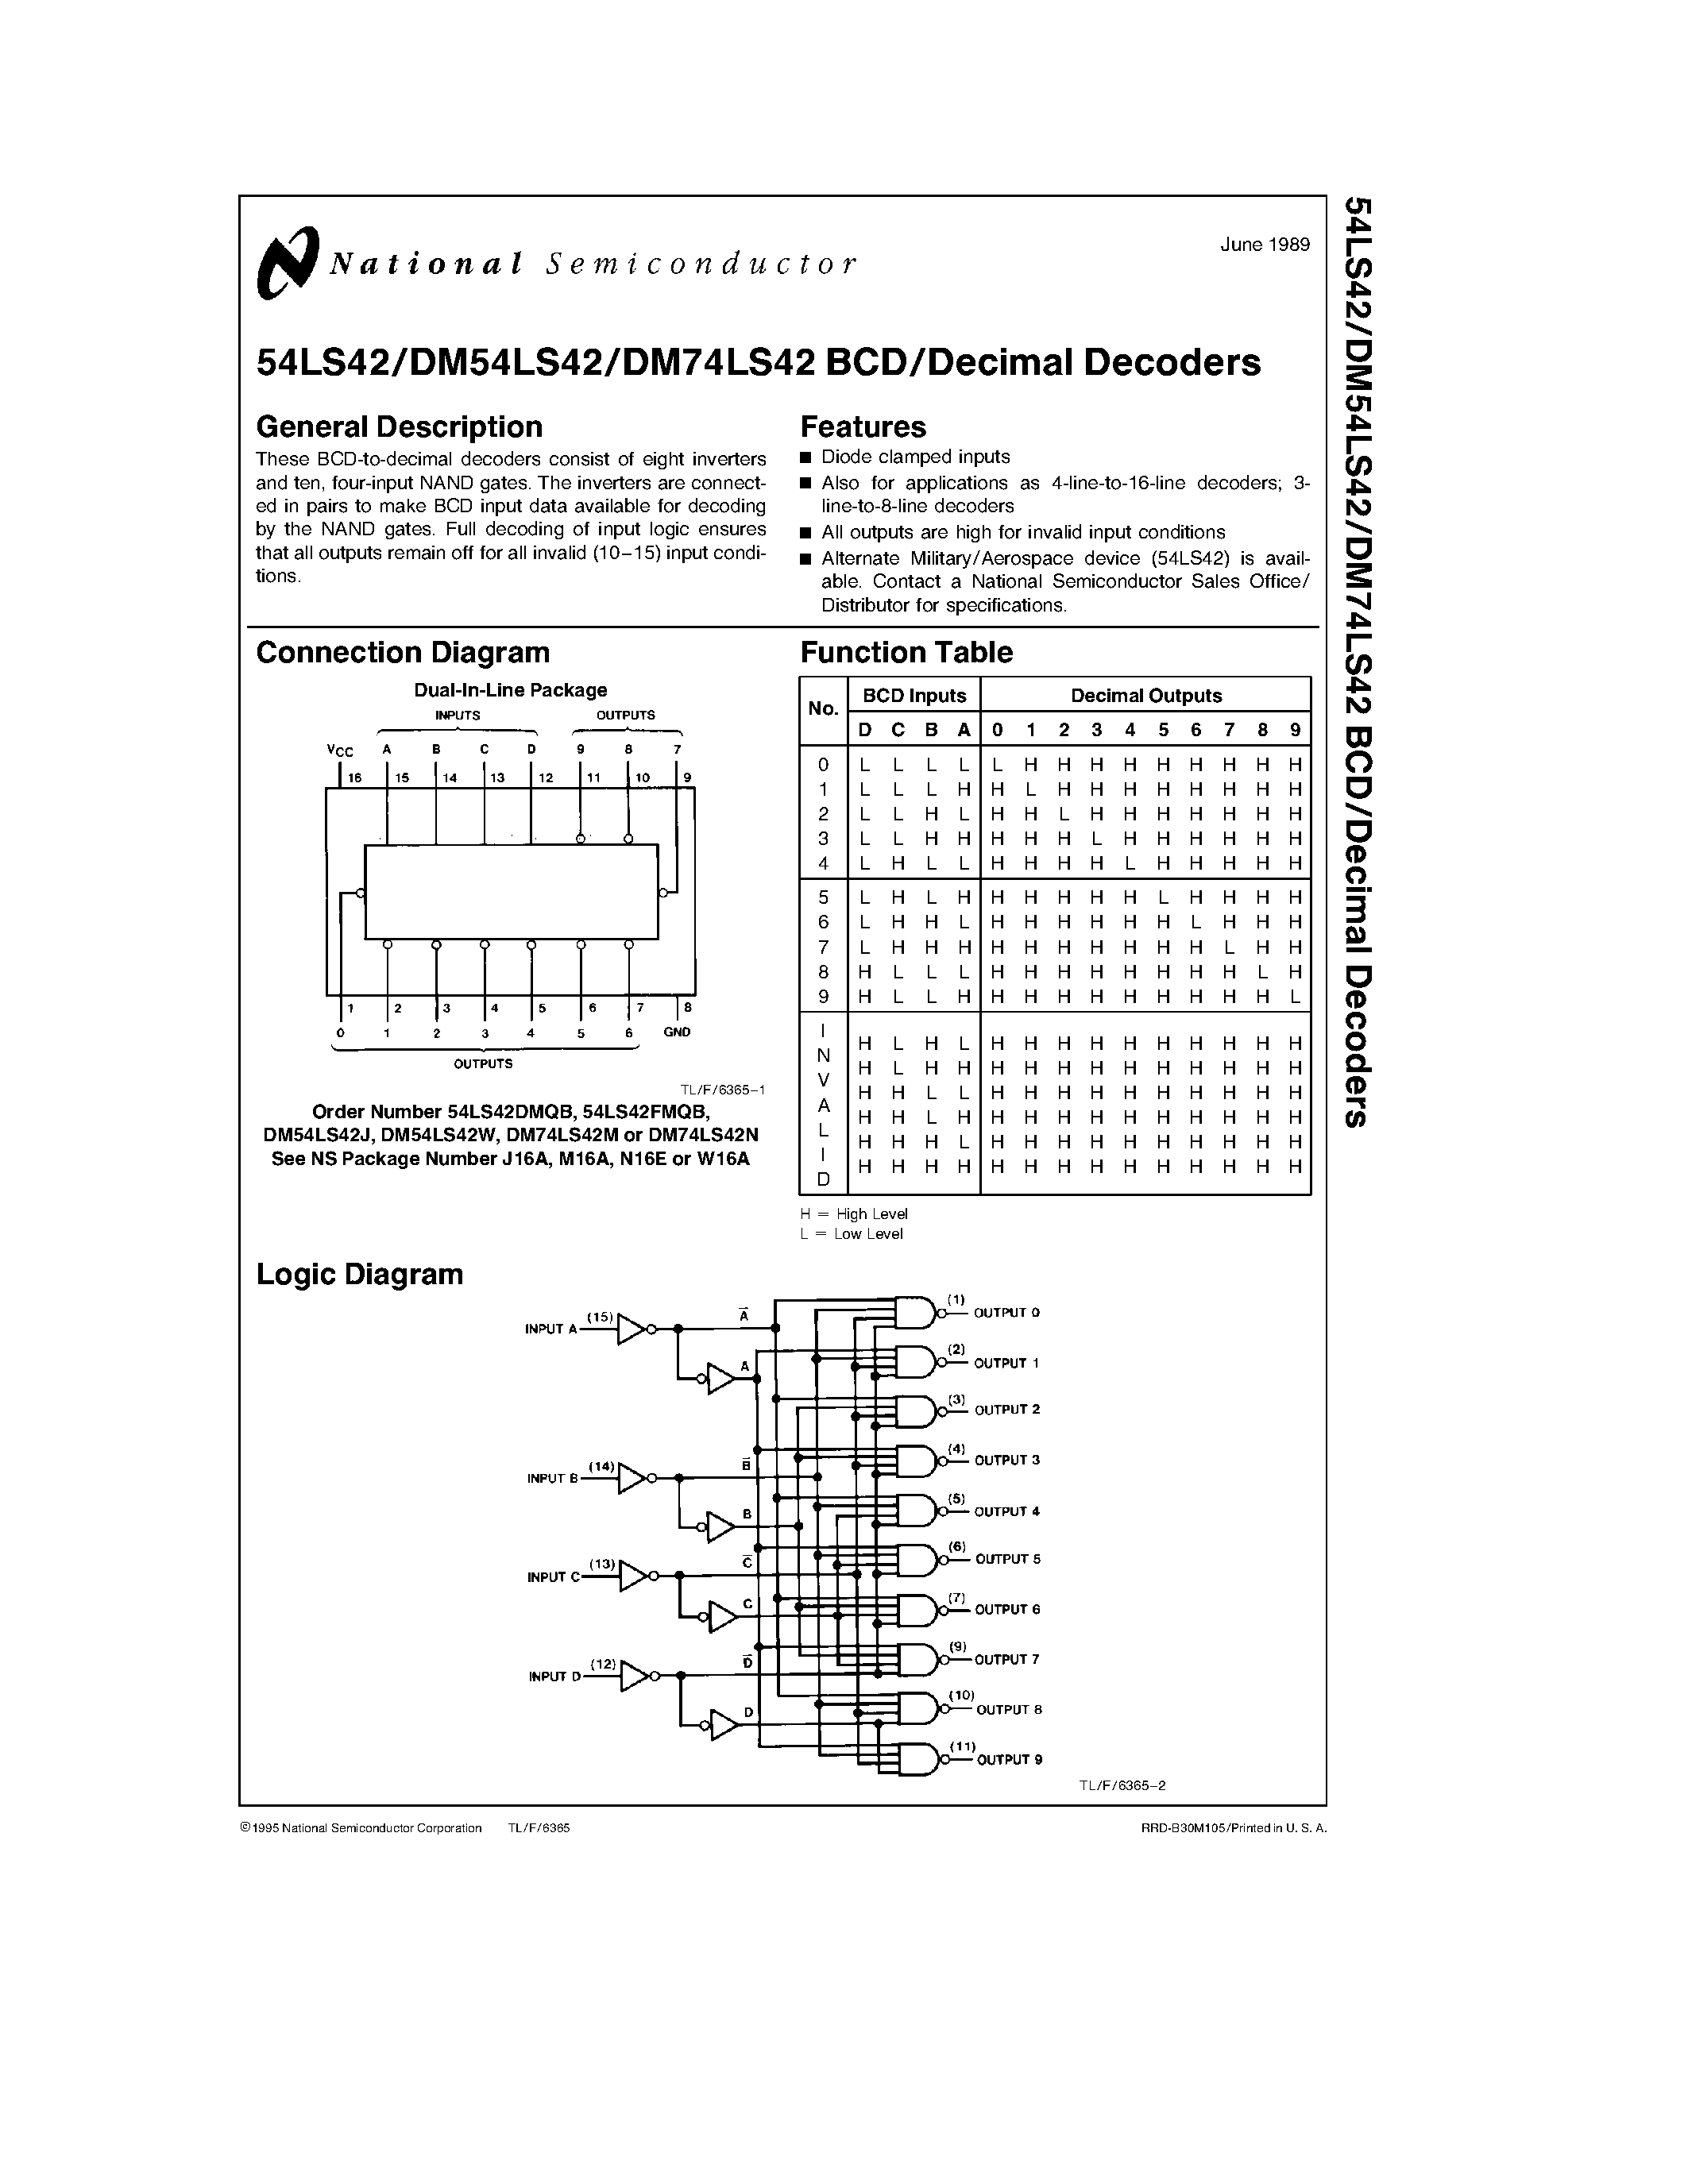 Datasheet DM74LS42 - Decimal Decoders page 1